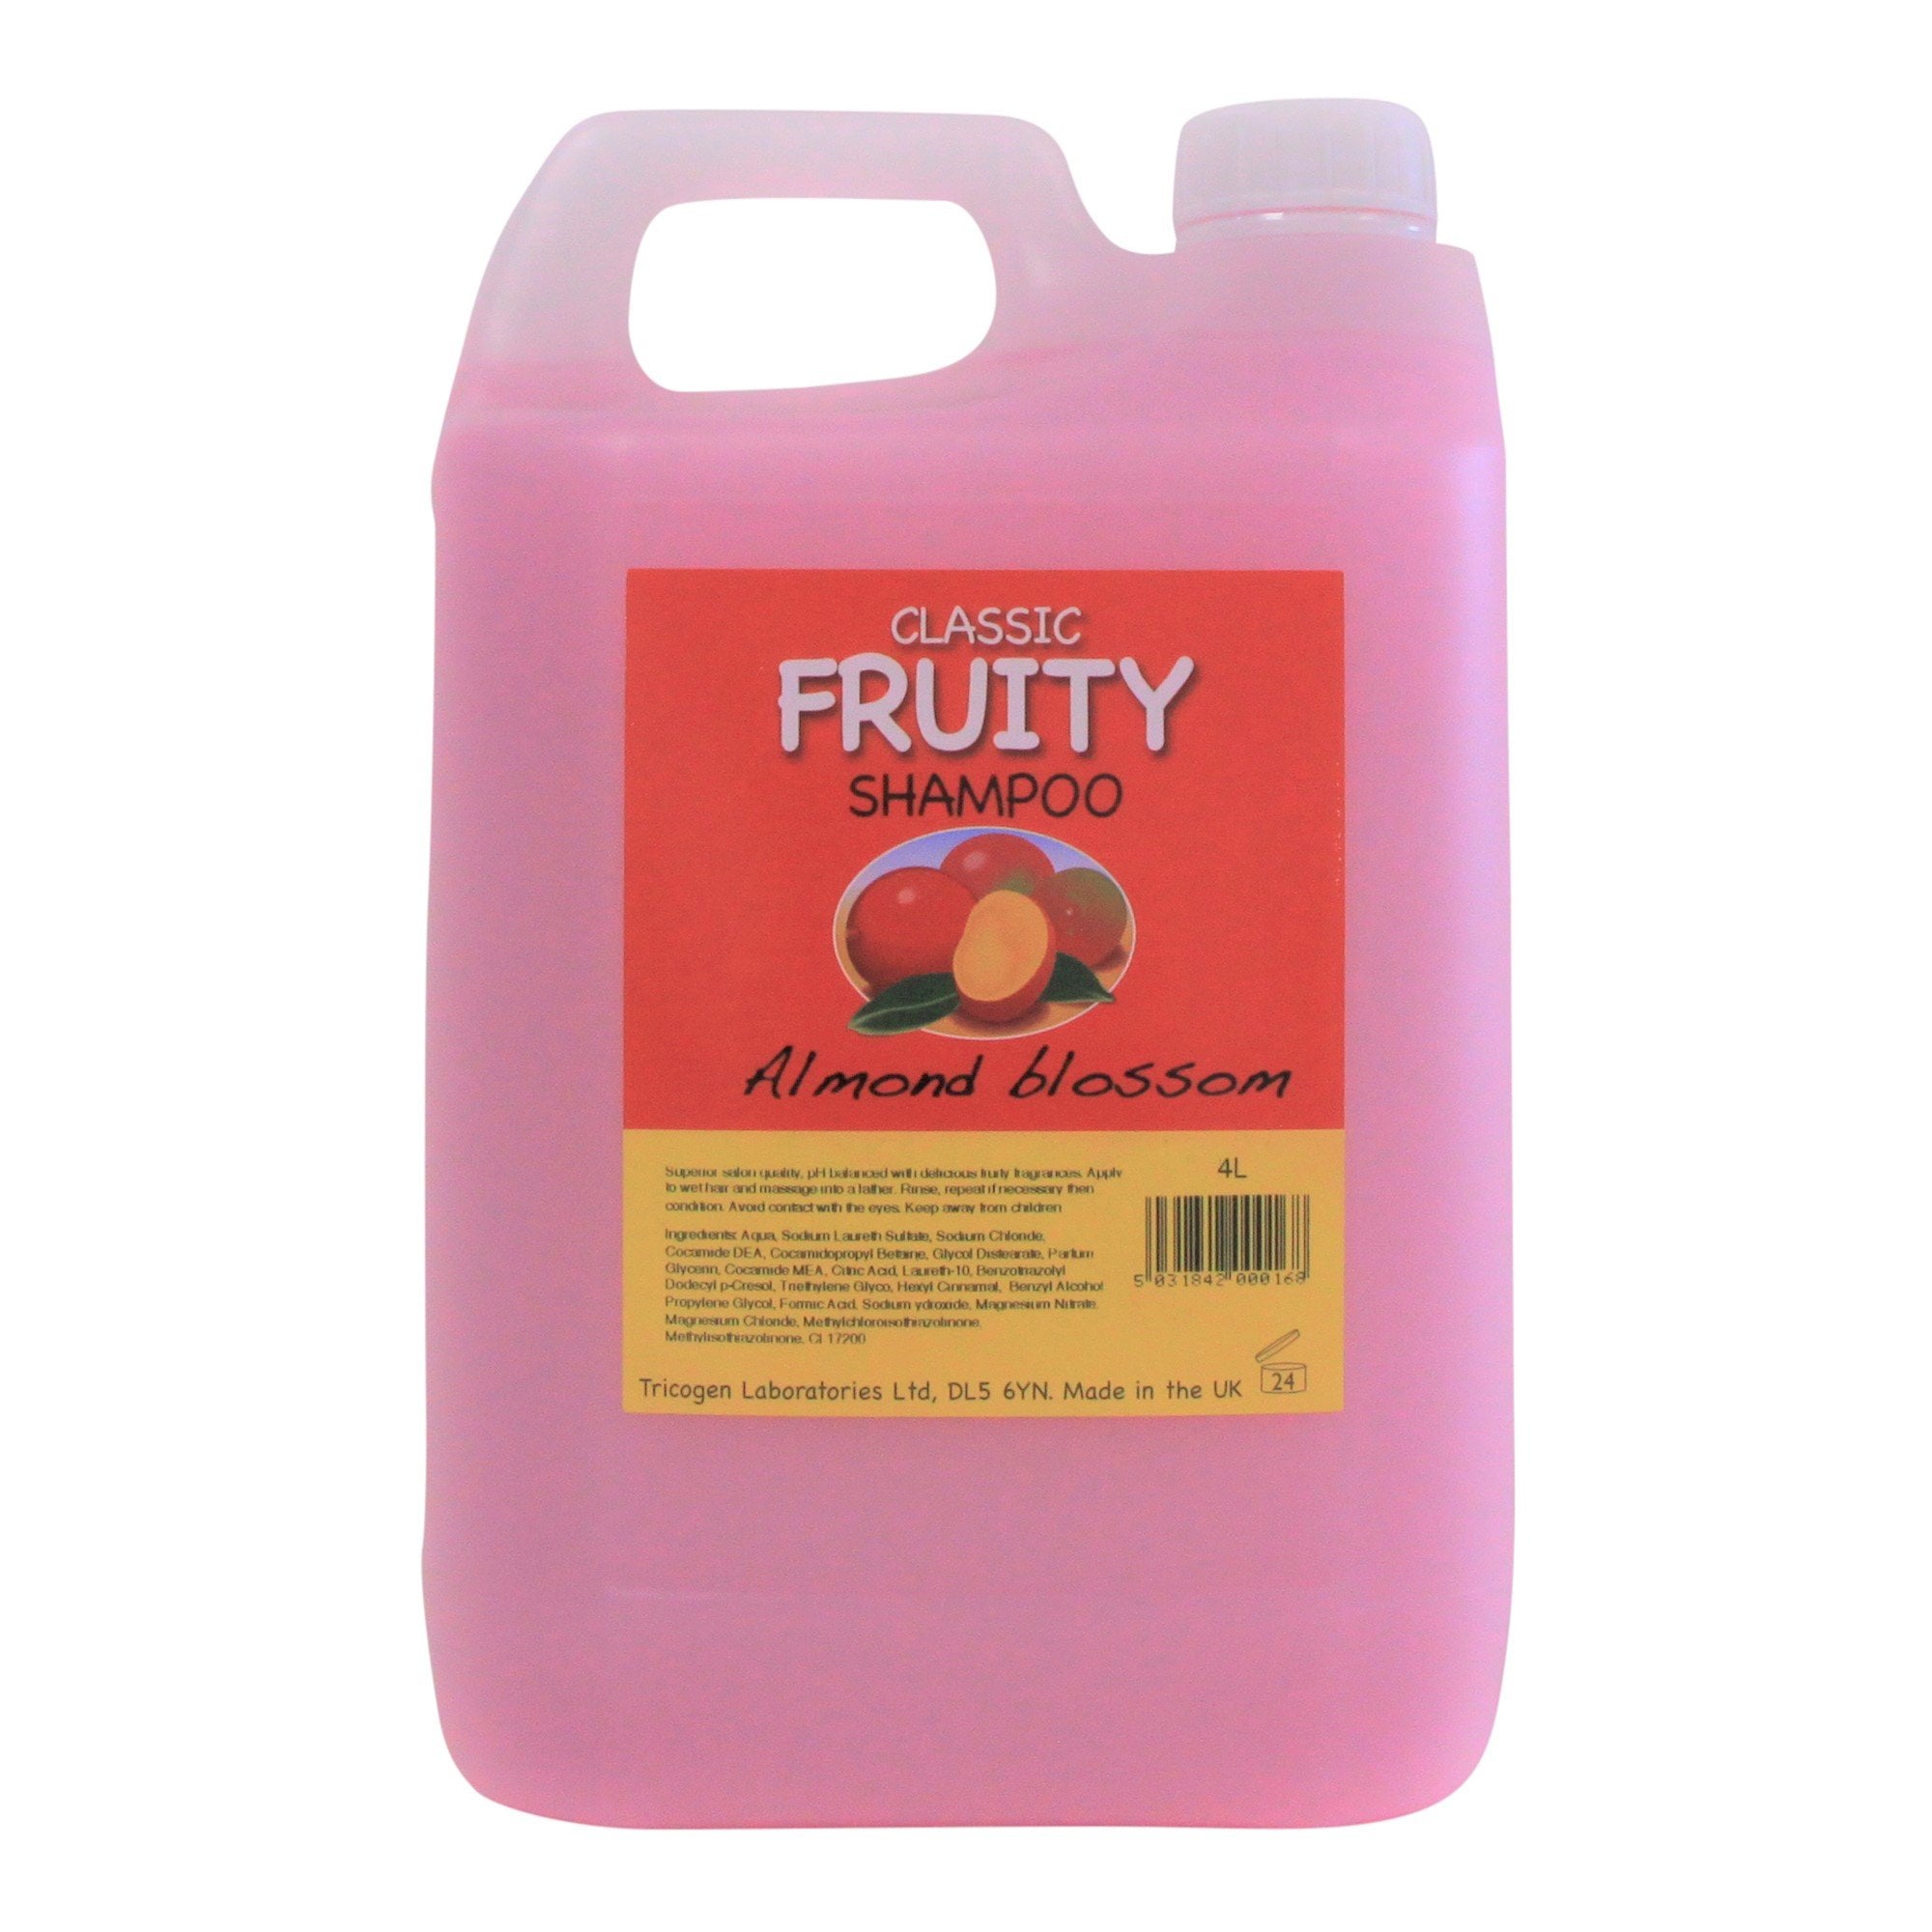 Classic Fruity Shampoo 4000ml - Almond